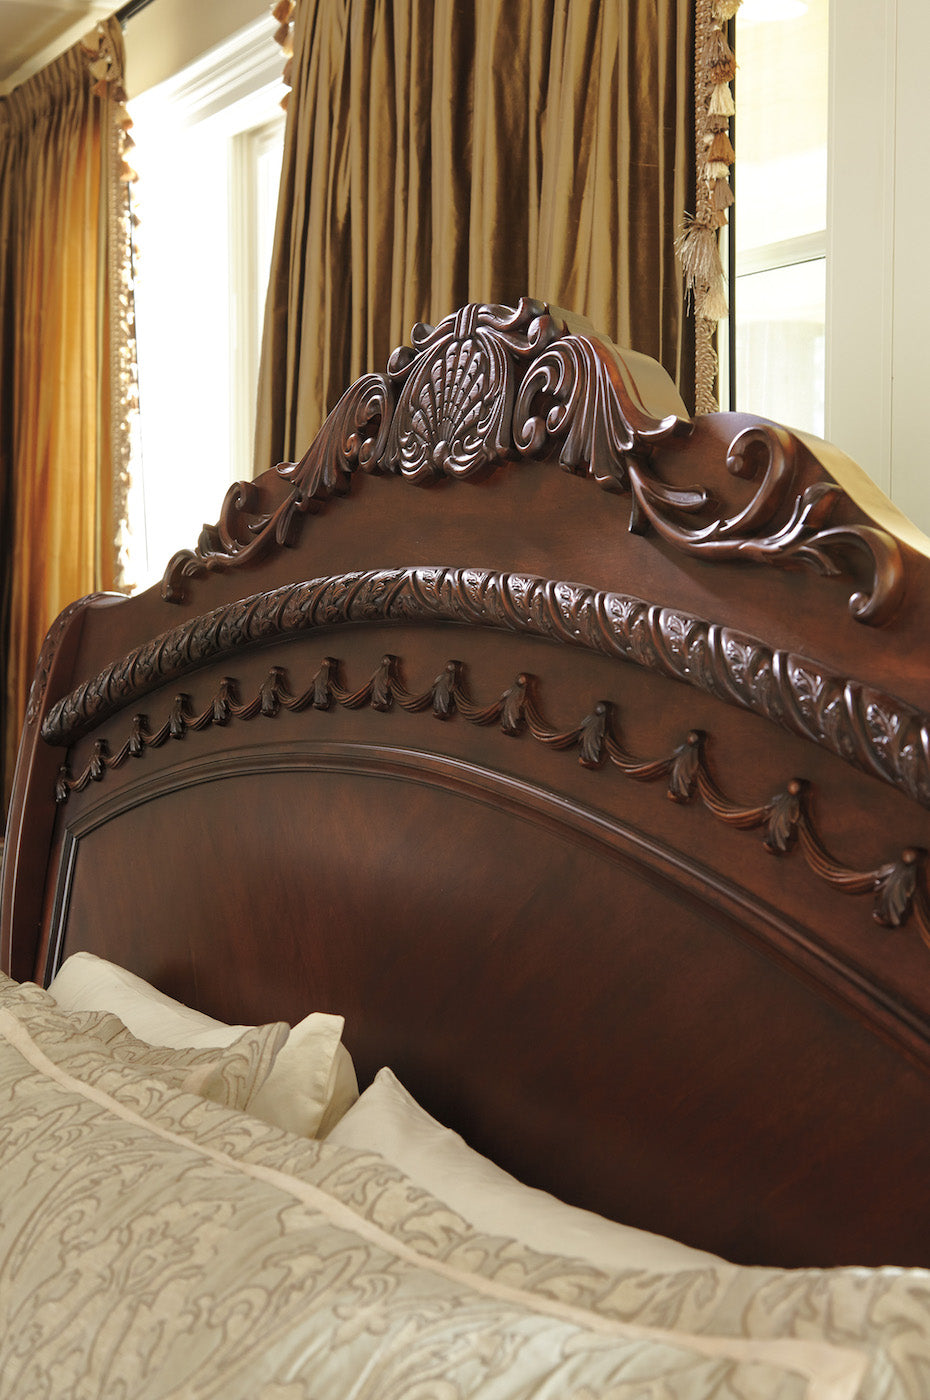 north shore queen 5 piece bedroom set – adams furniture